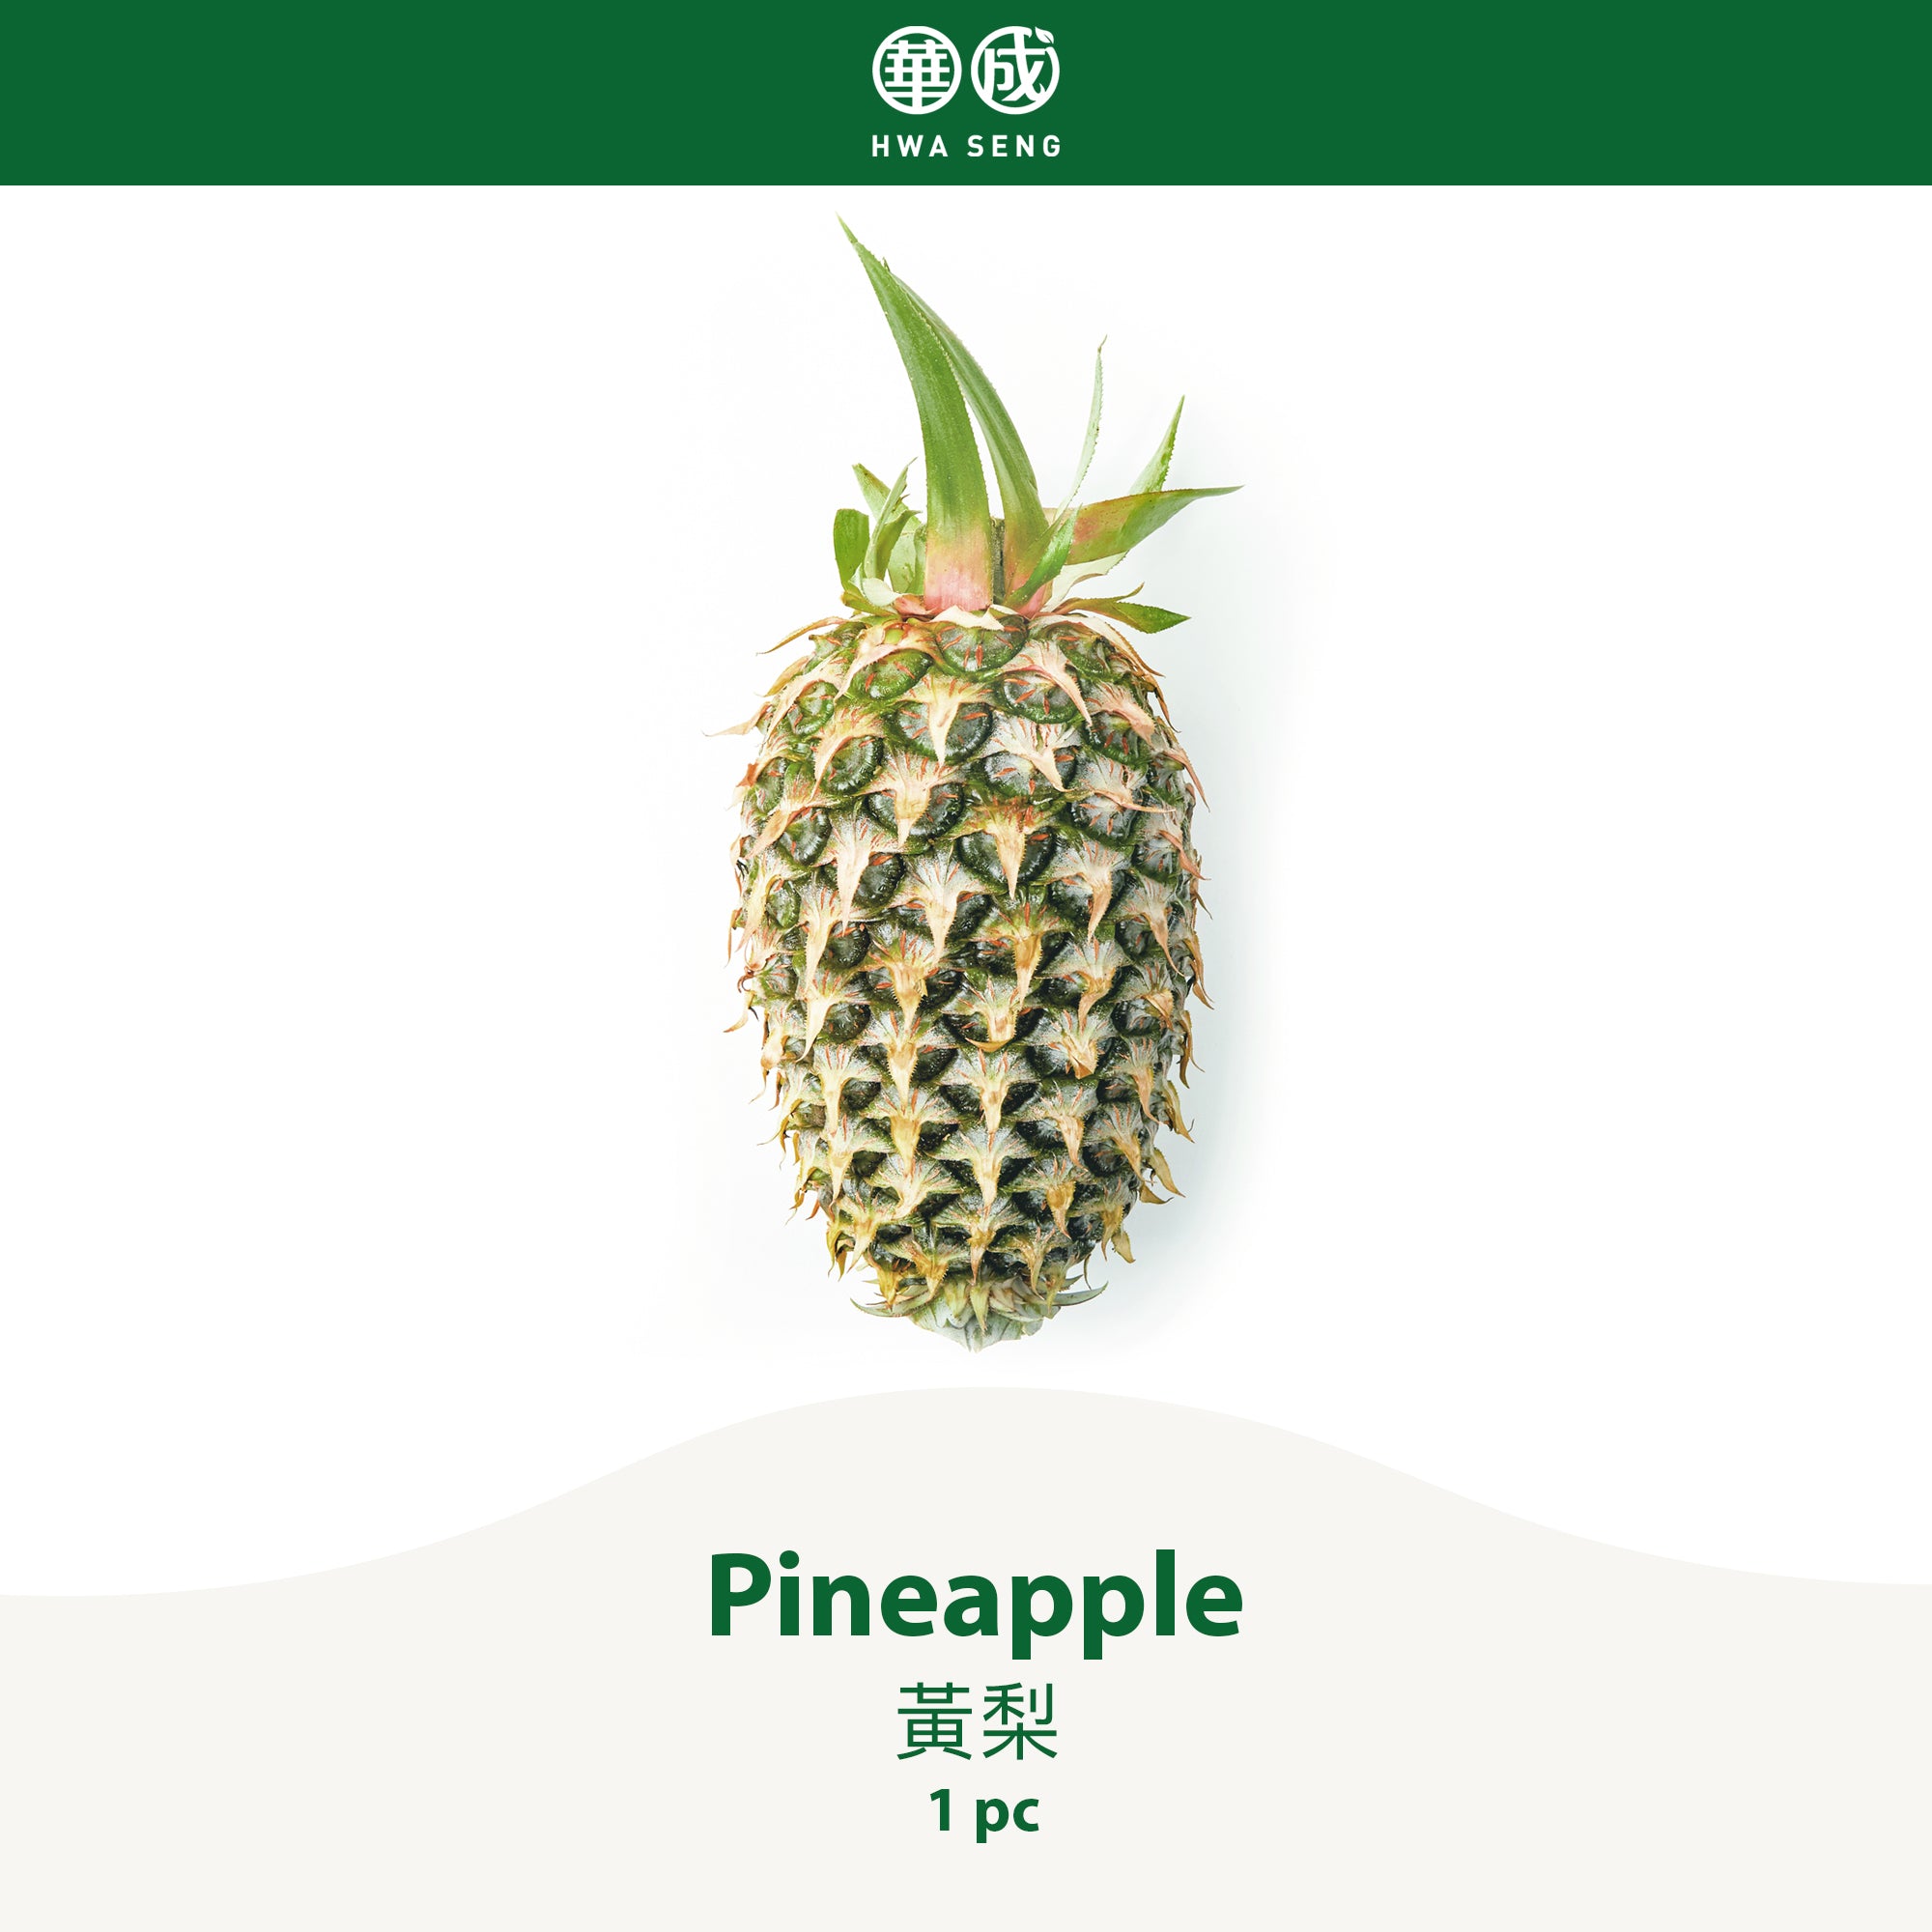 Pineapple 黃梨 1pc